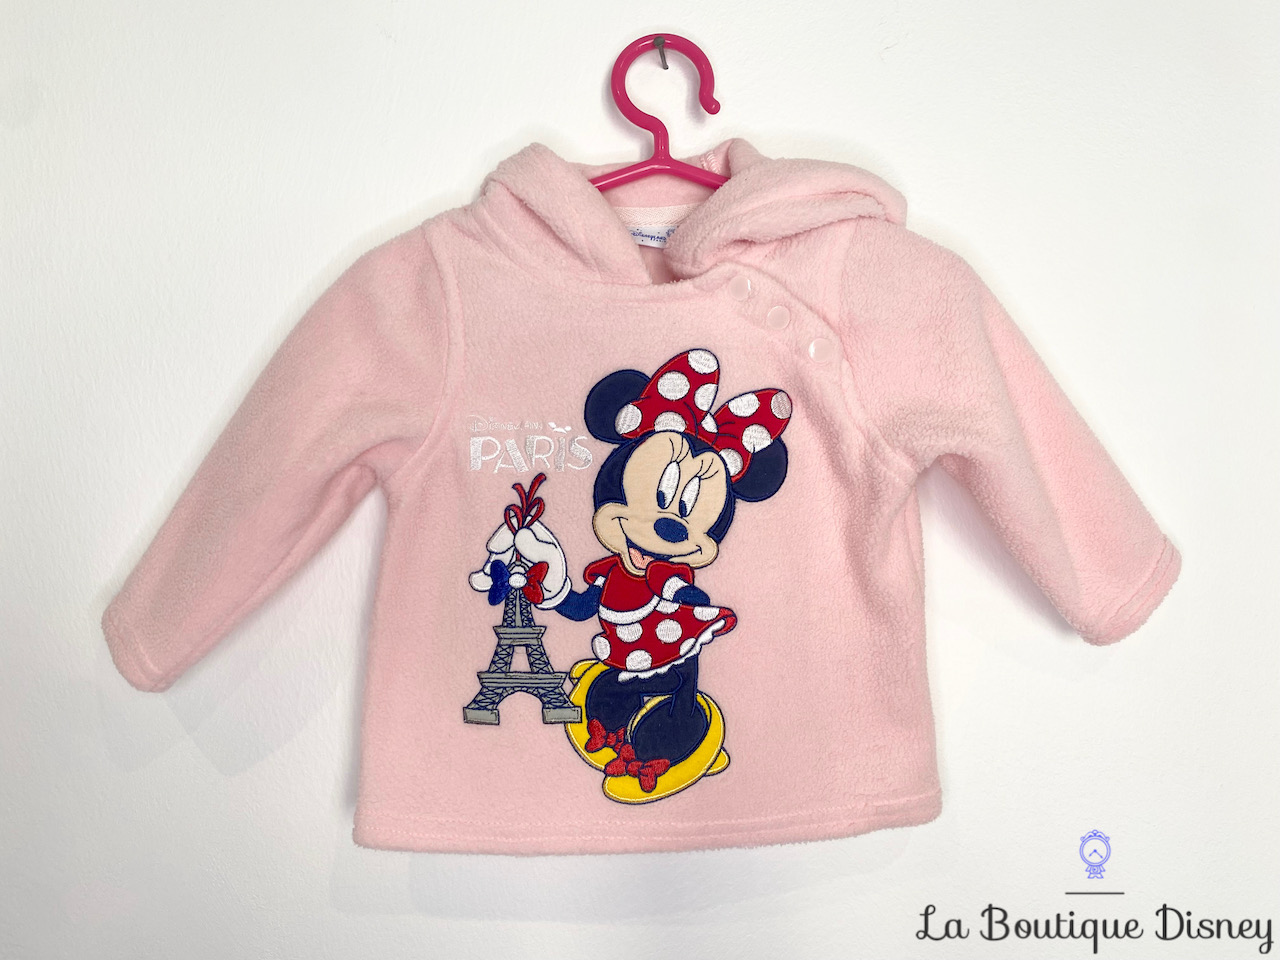 Sweat polaire Minnie Mouse Disneyland Paris Disney taille 6 mois rose capuche Tour Eiffel